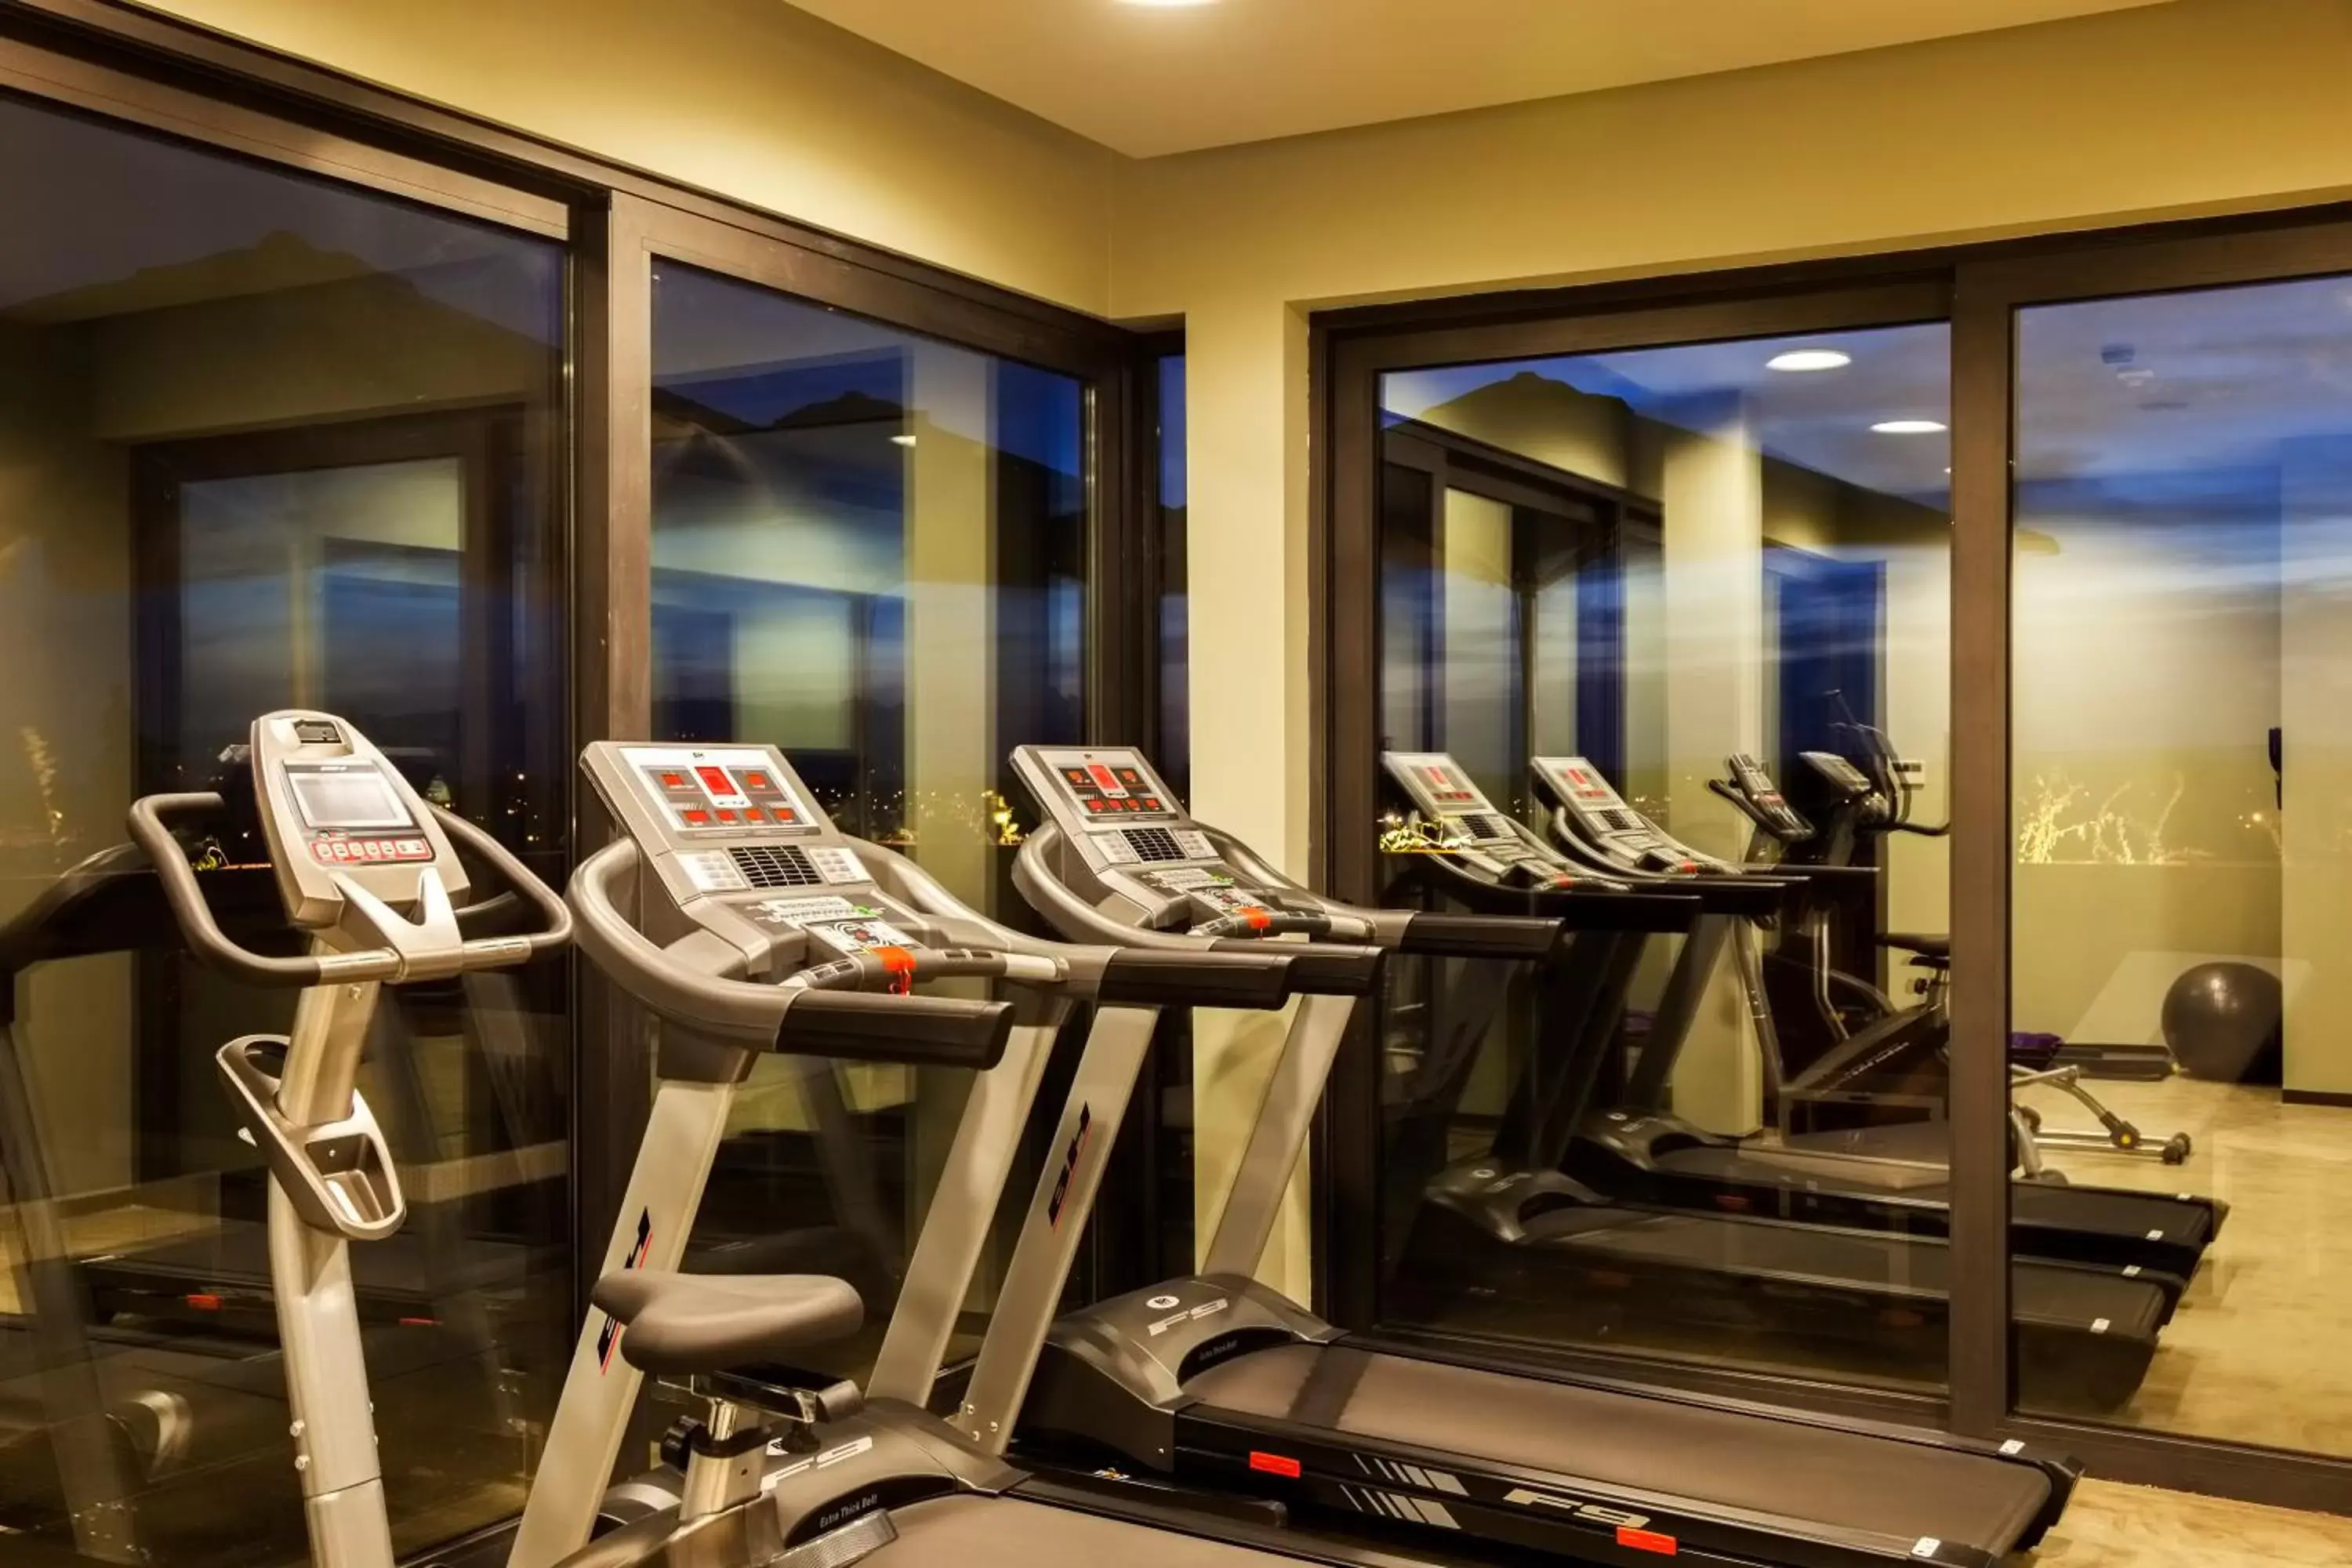 Fitness centre/facilities, Fitness Center/Facilities in Vitoria Stone Hotel